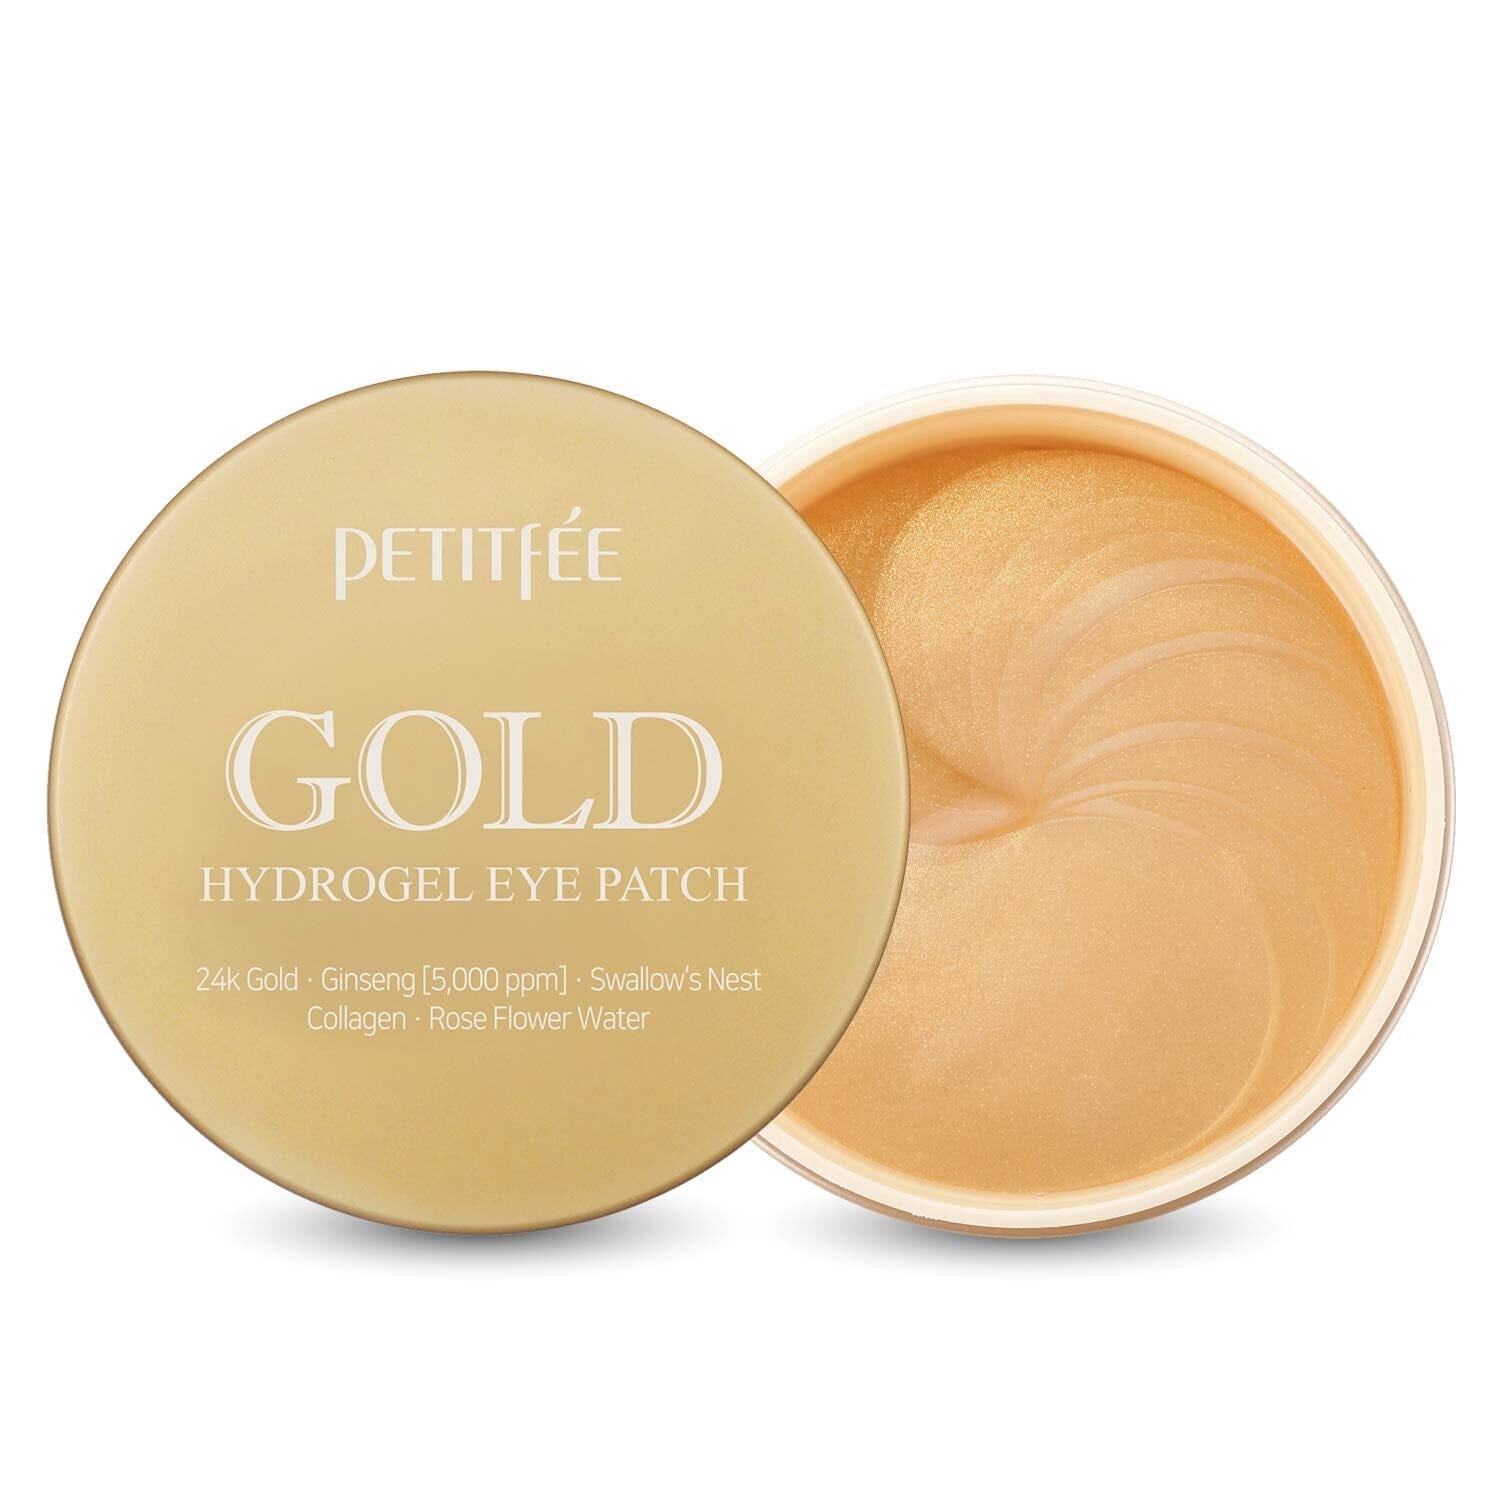 Petitfee Gold Hydrogel Eye Patch 60ea Skin Care Petitfee ORION XO Sri Lanka